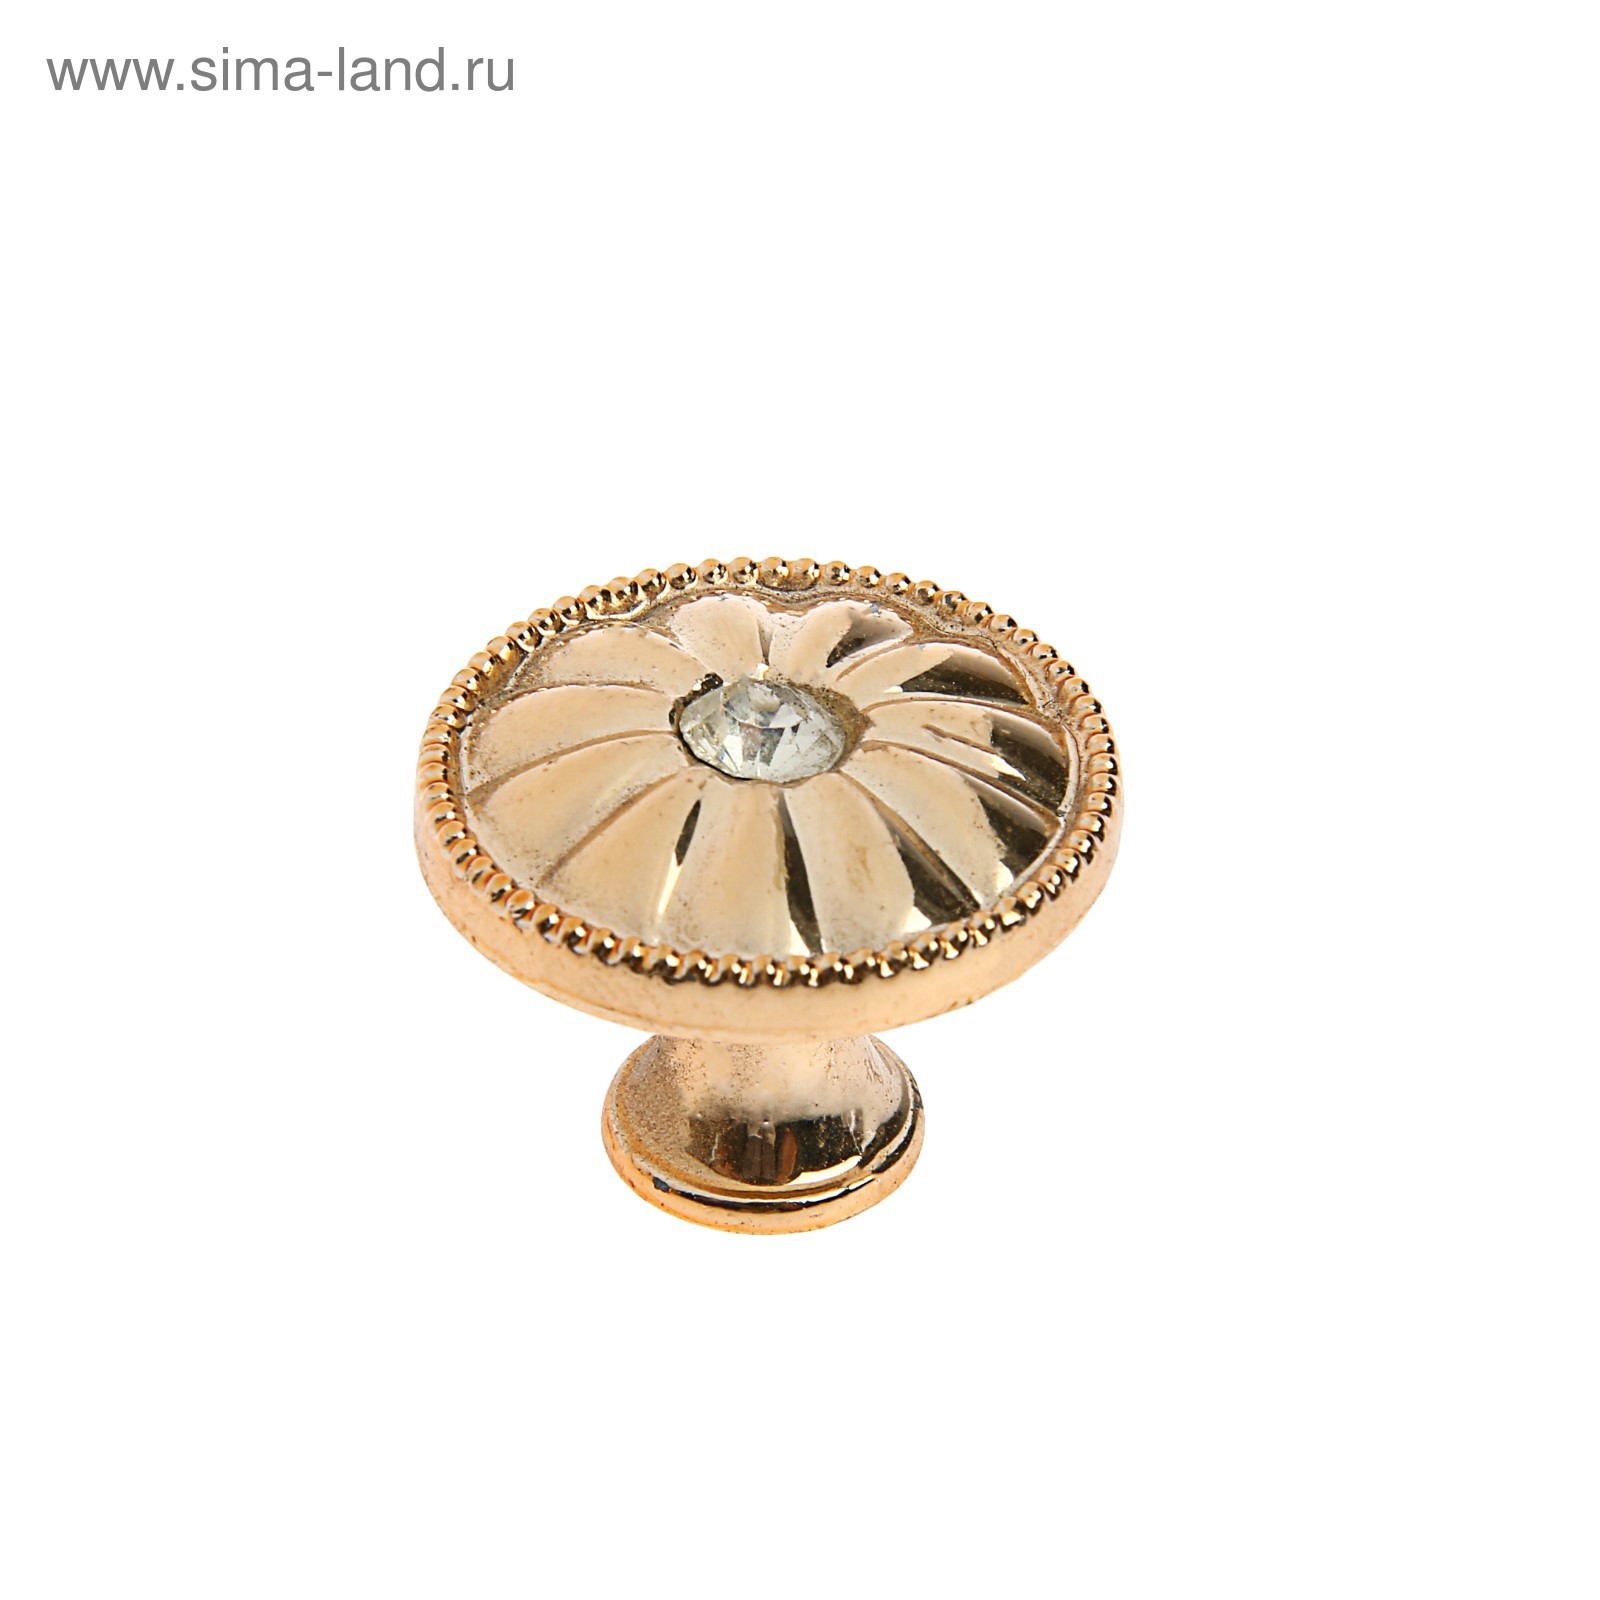  кнопка Тундра РК116GP цвет золото в Новосибирске –  по .